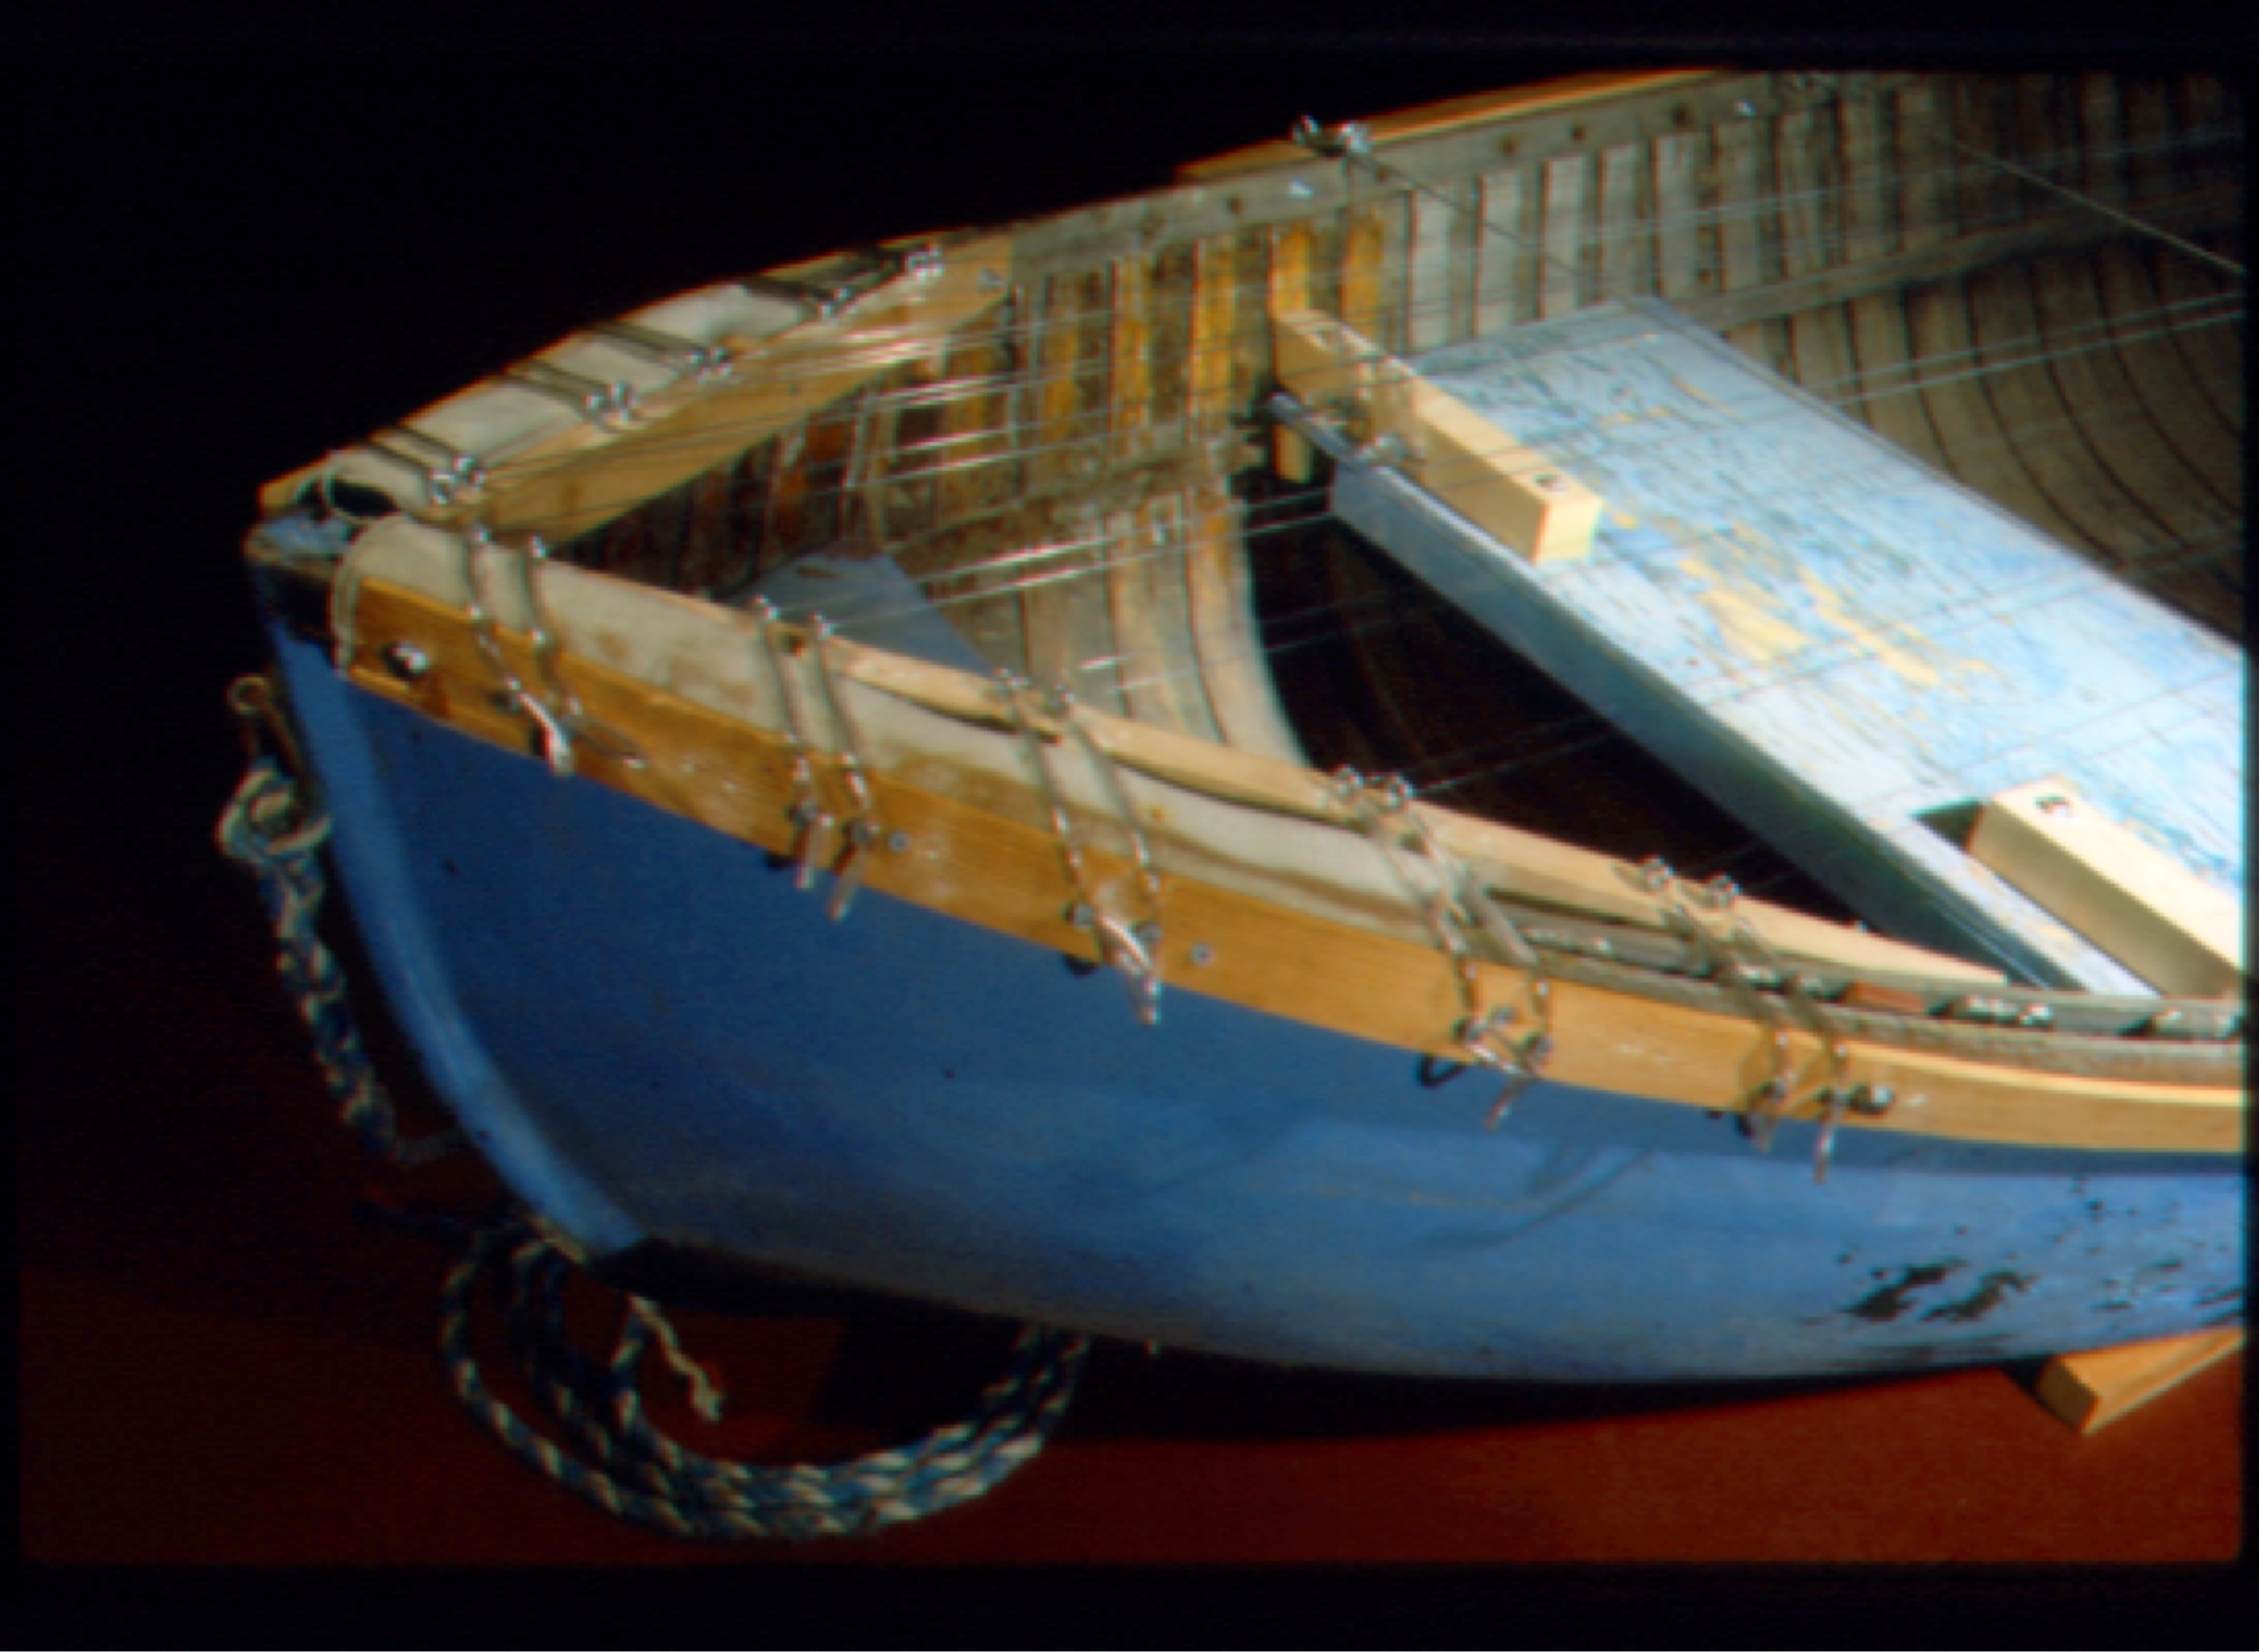 Blue boat - bow, details in caption below